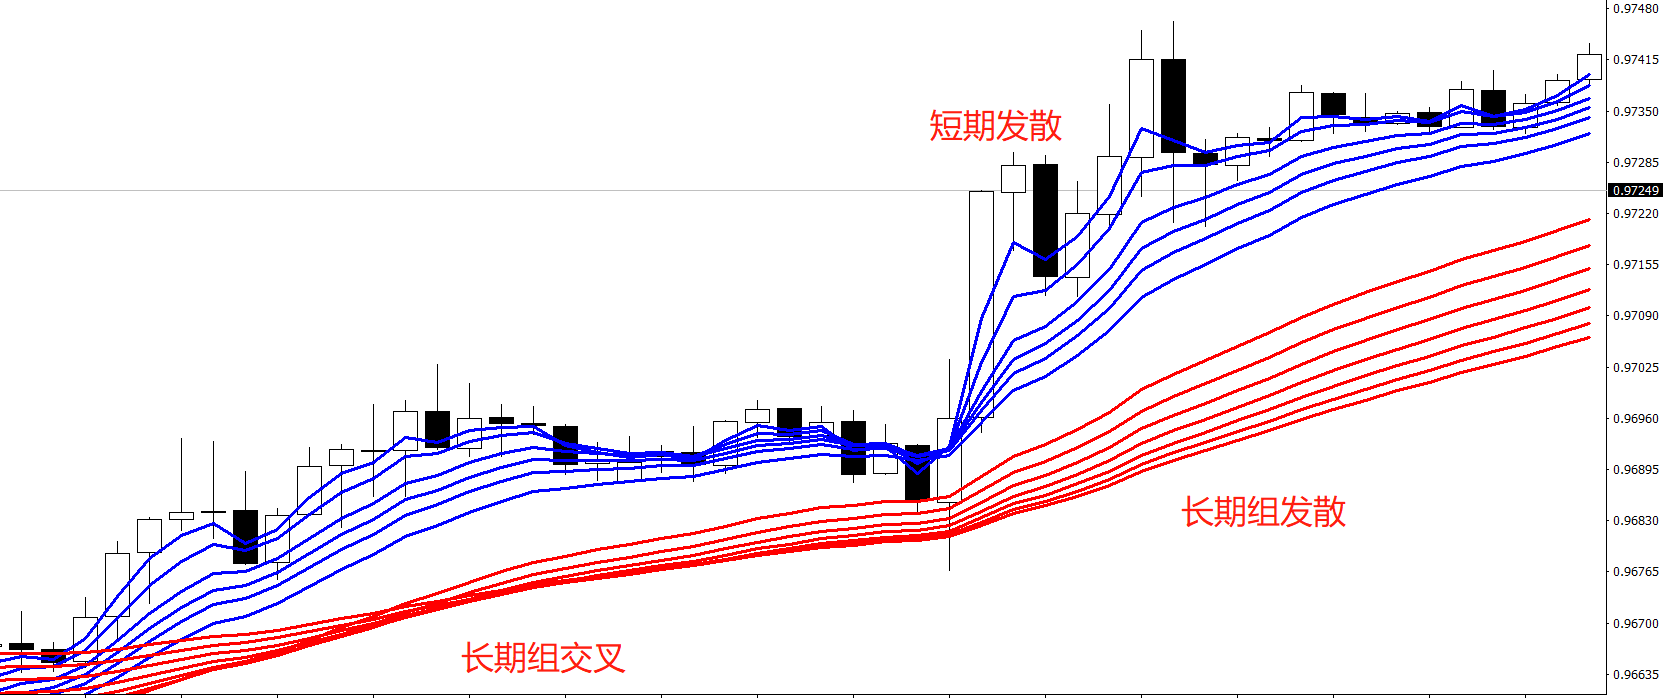 GKFXPrimeJiekai Finance: A Sharp Tool for Foreign Exchange Trend Trading---knowGMMAGubi Moving Average (Below)897 / author:GKFXPrimeJiekai / PostsID:1544981